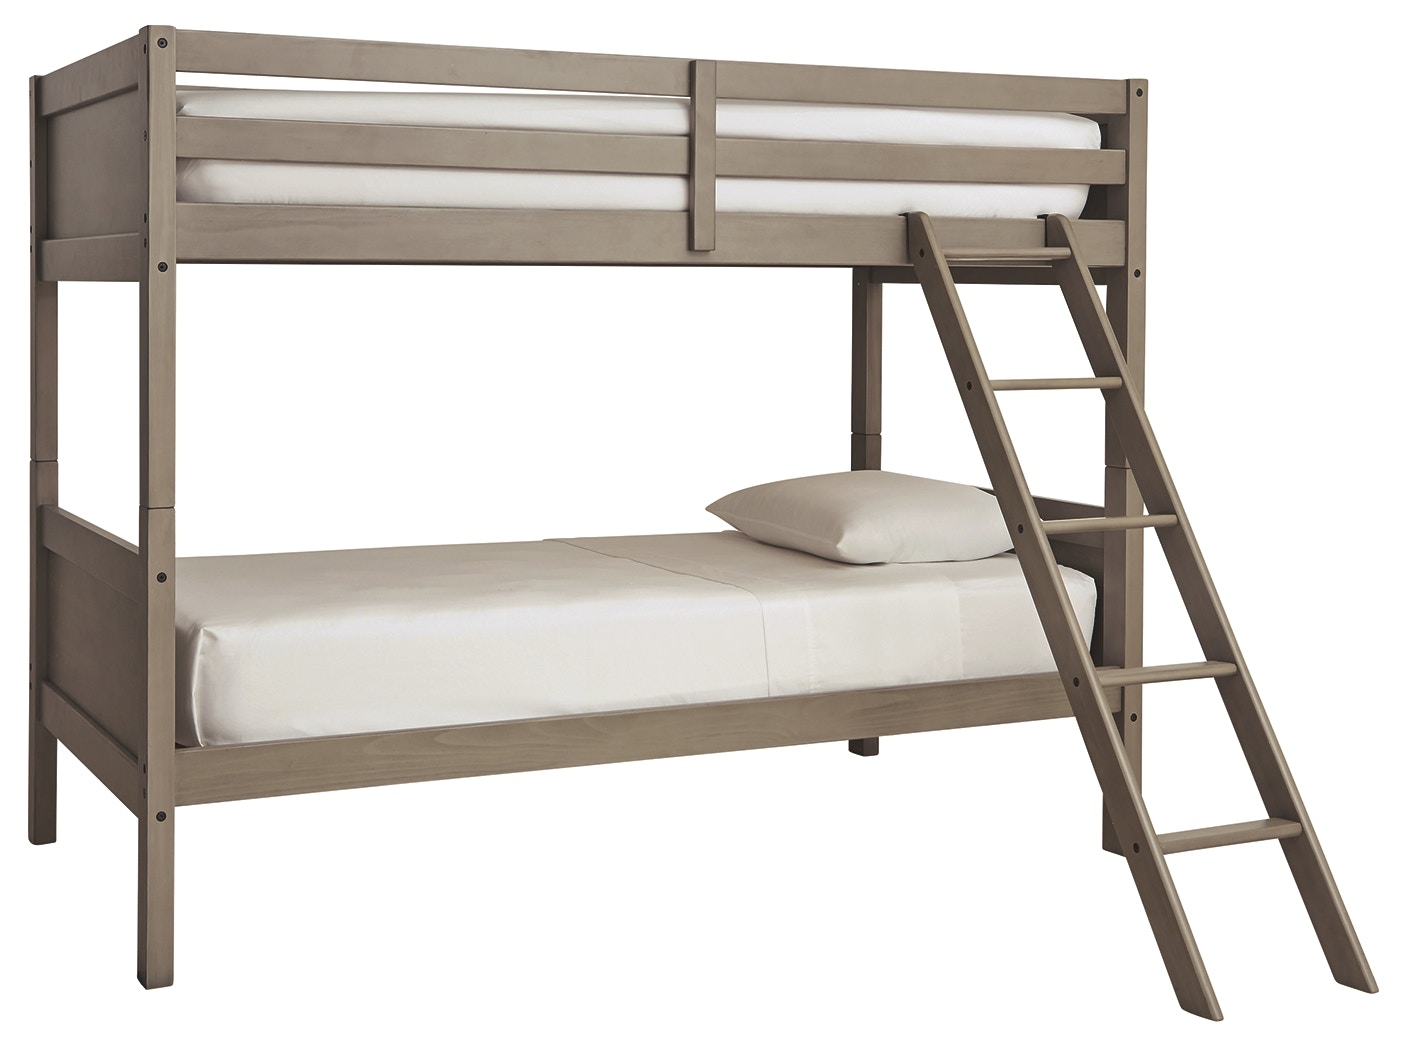 ashley bunk beds